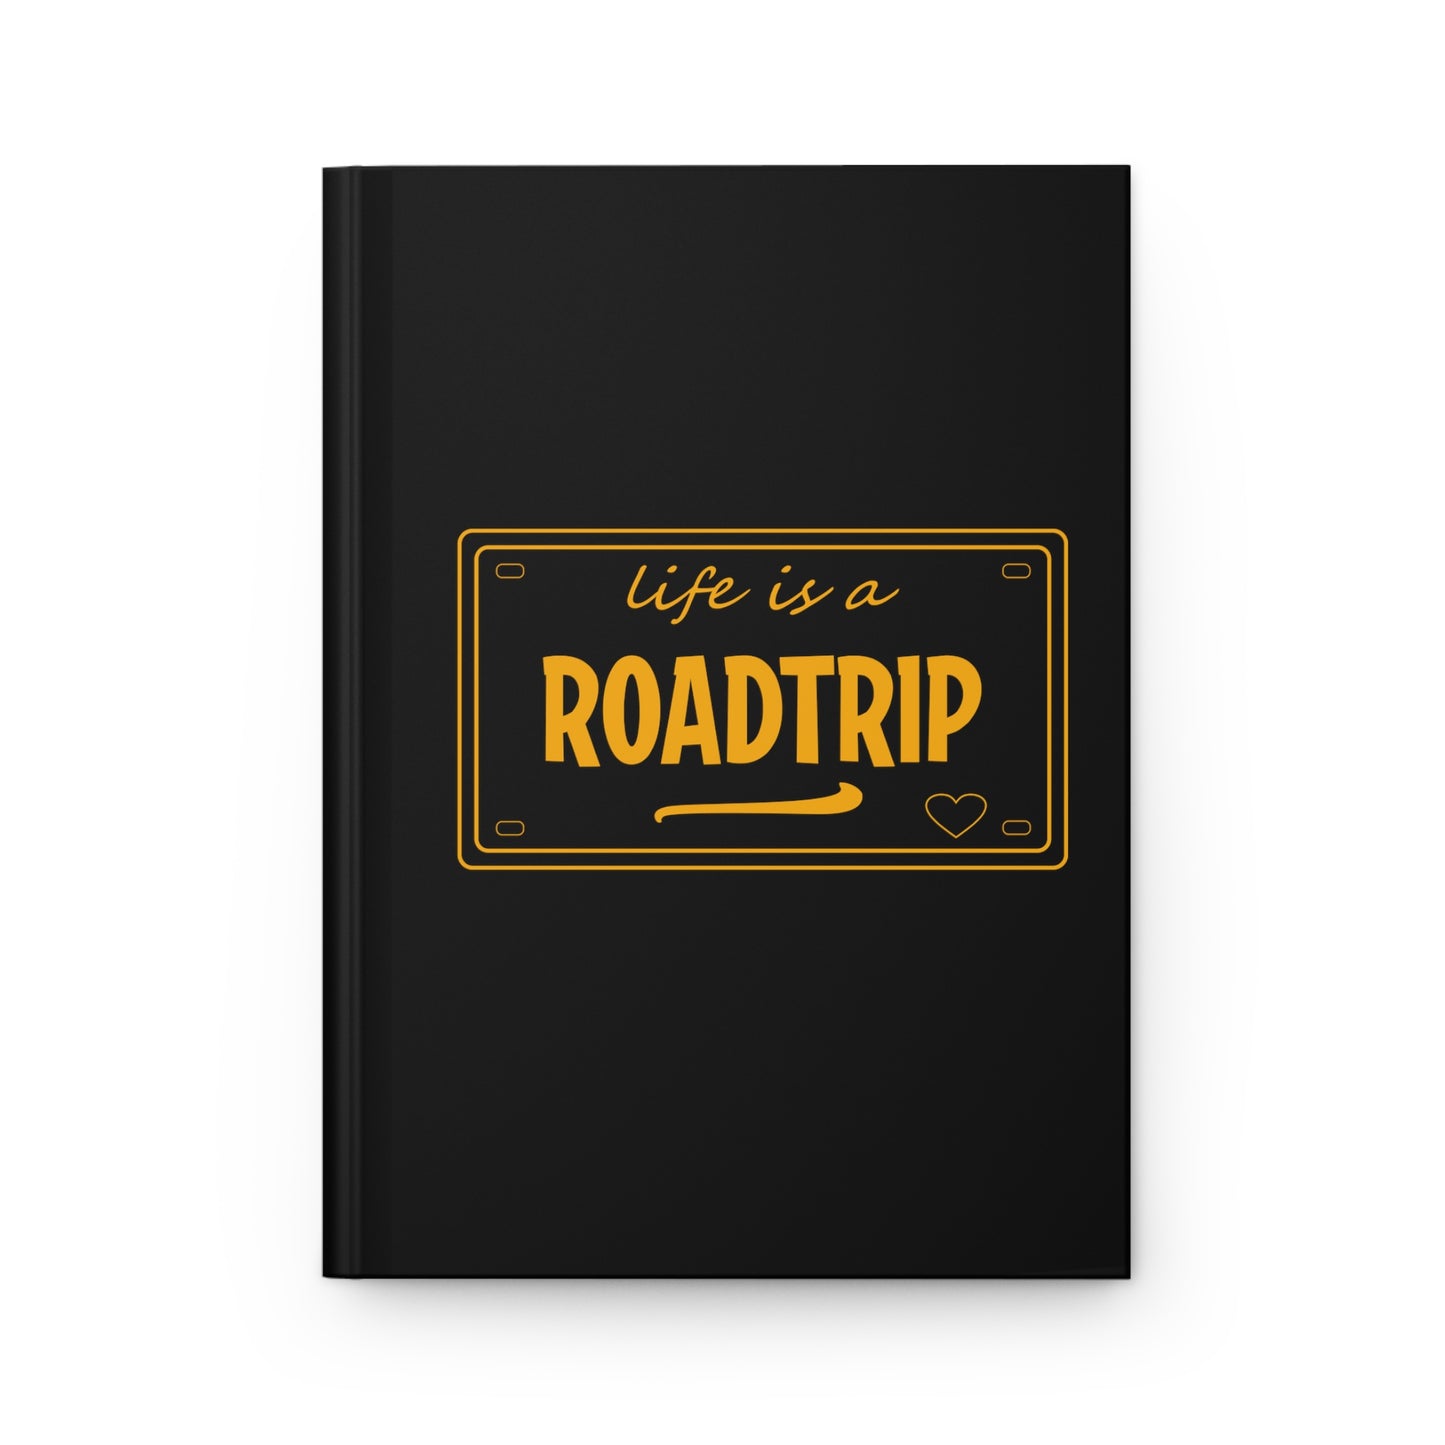 Life is a Road Trip - Hardcover Journal - Black/Orange